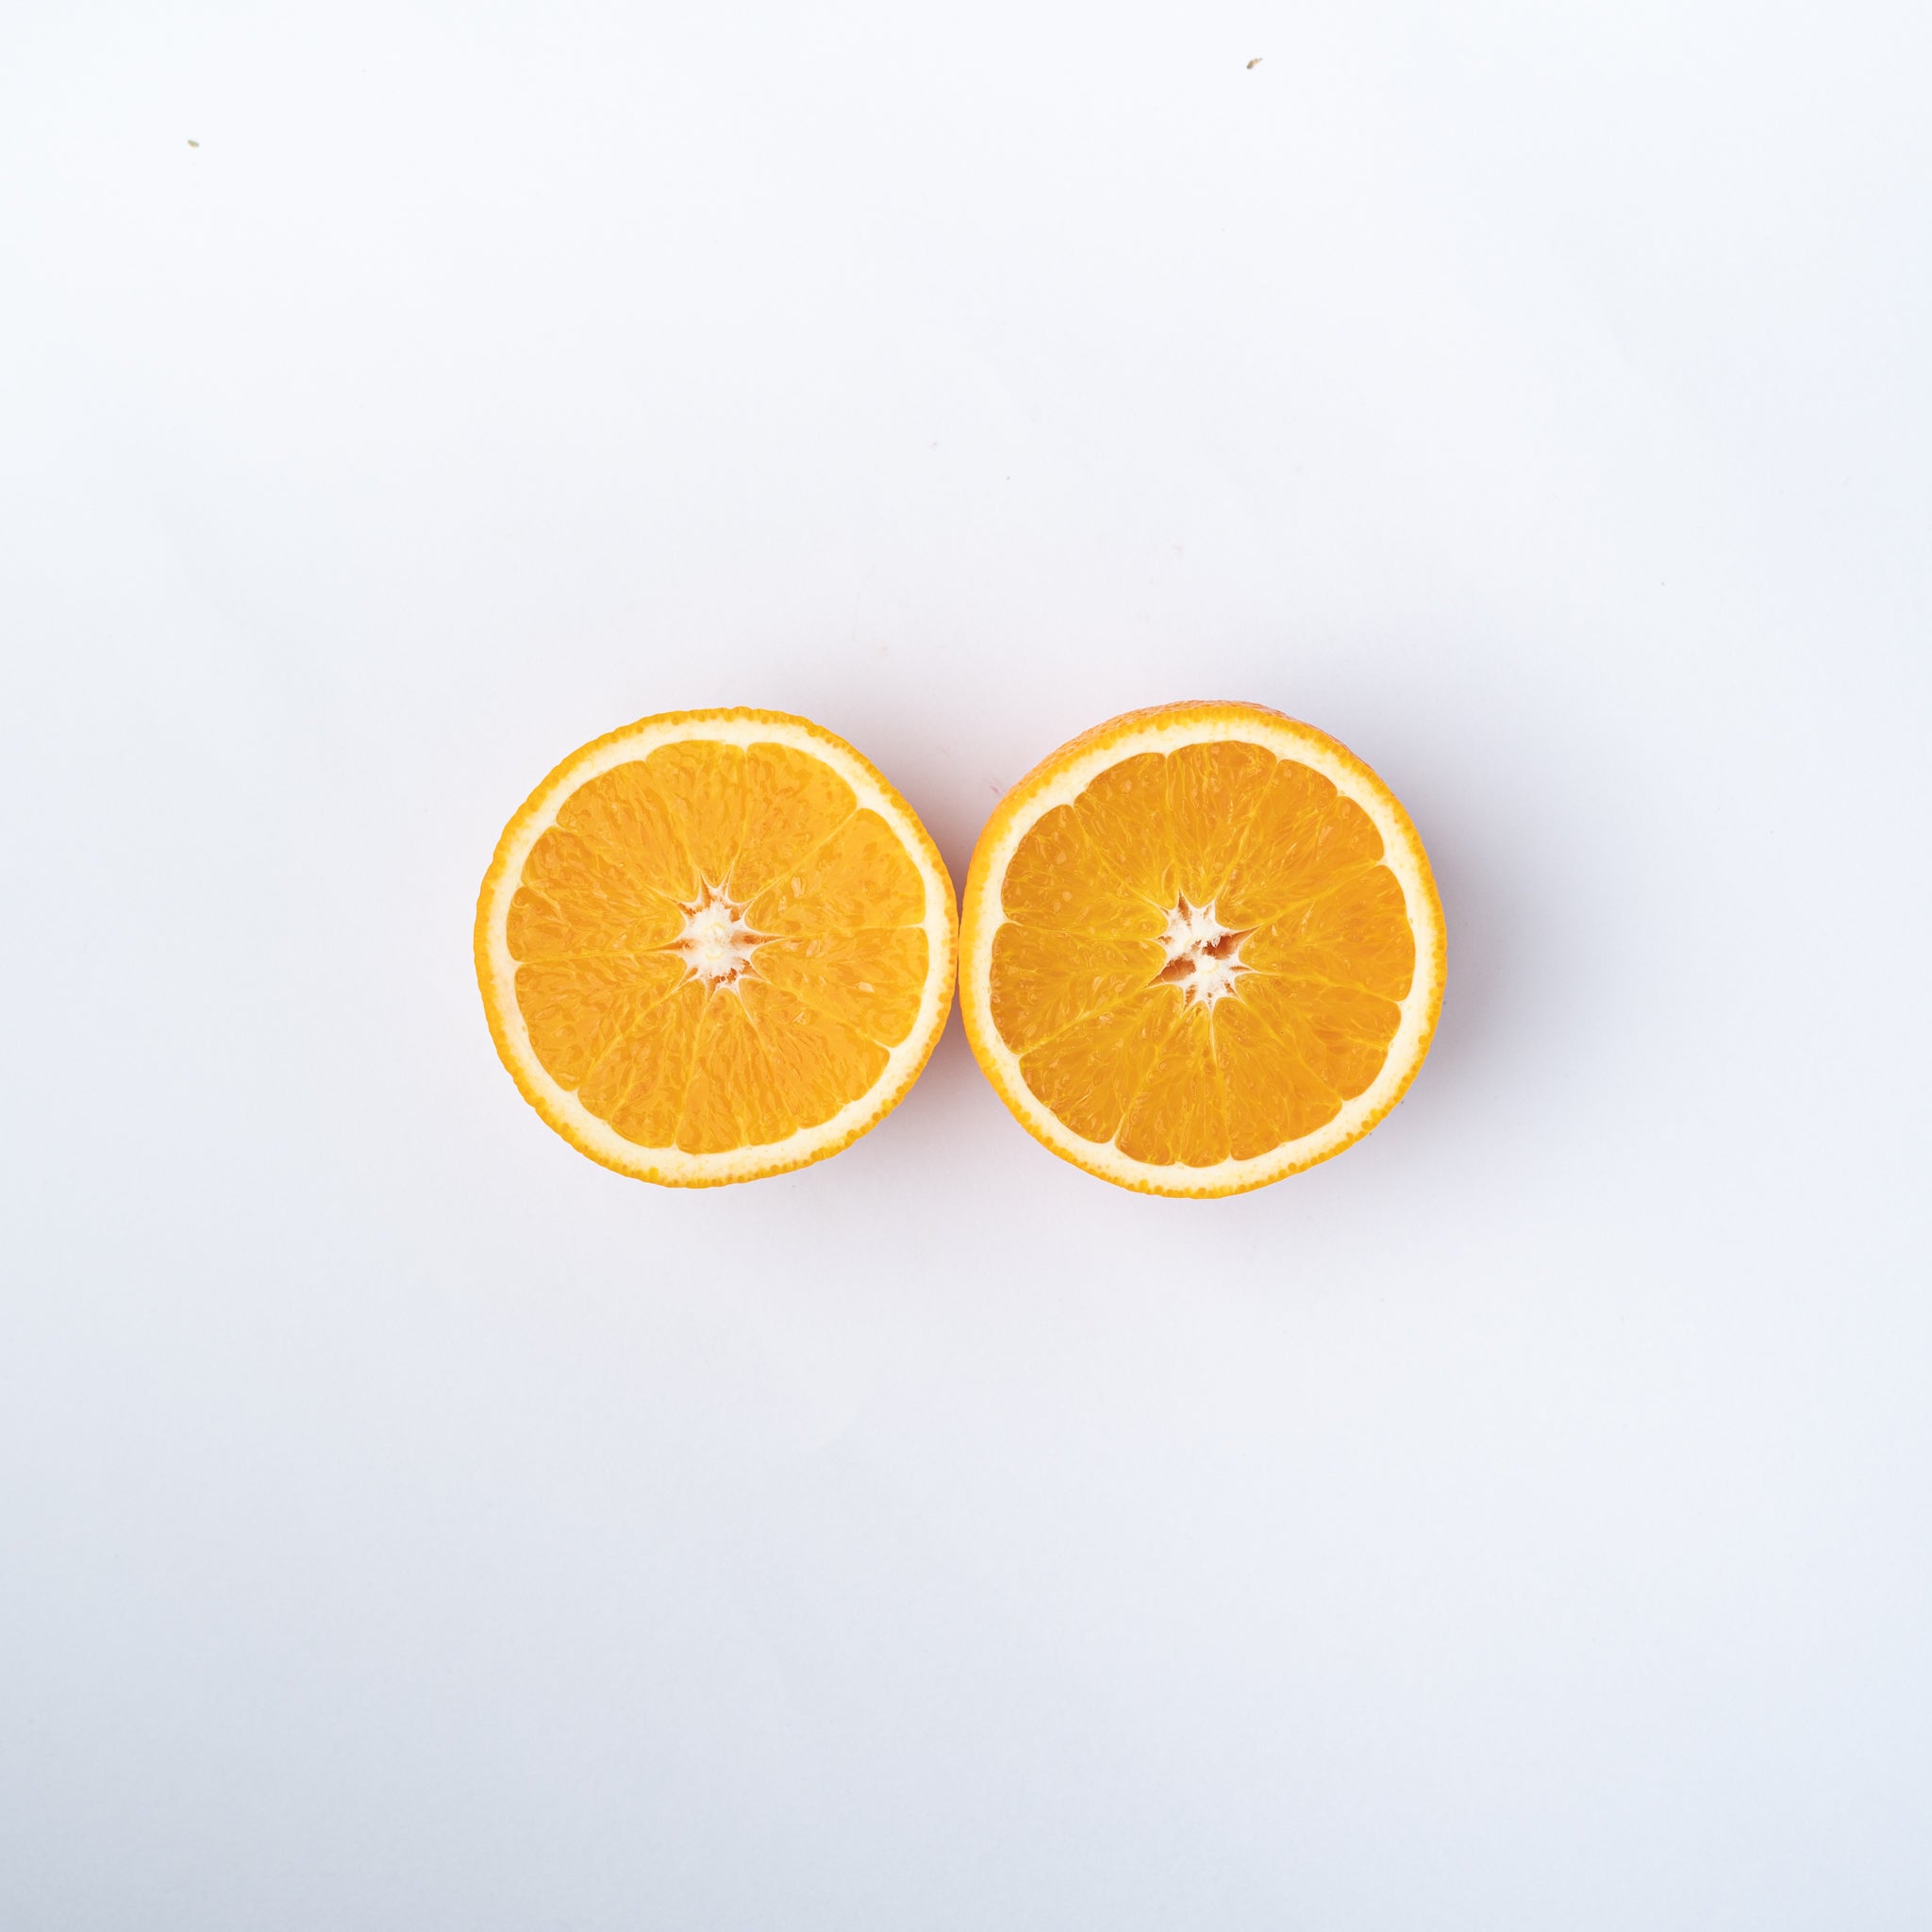 An orange cut into two halves.